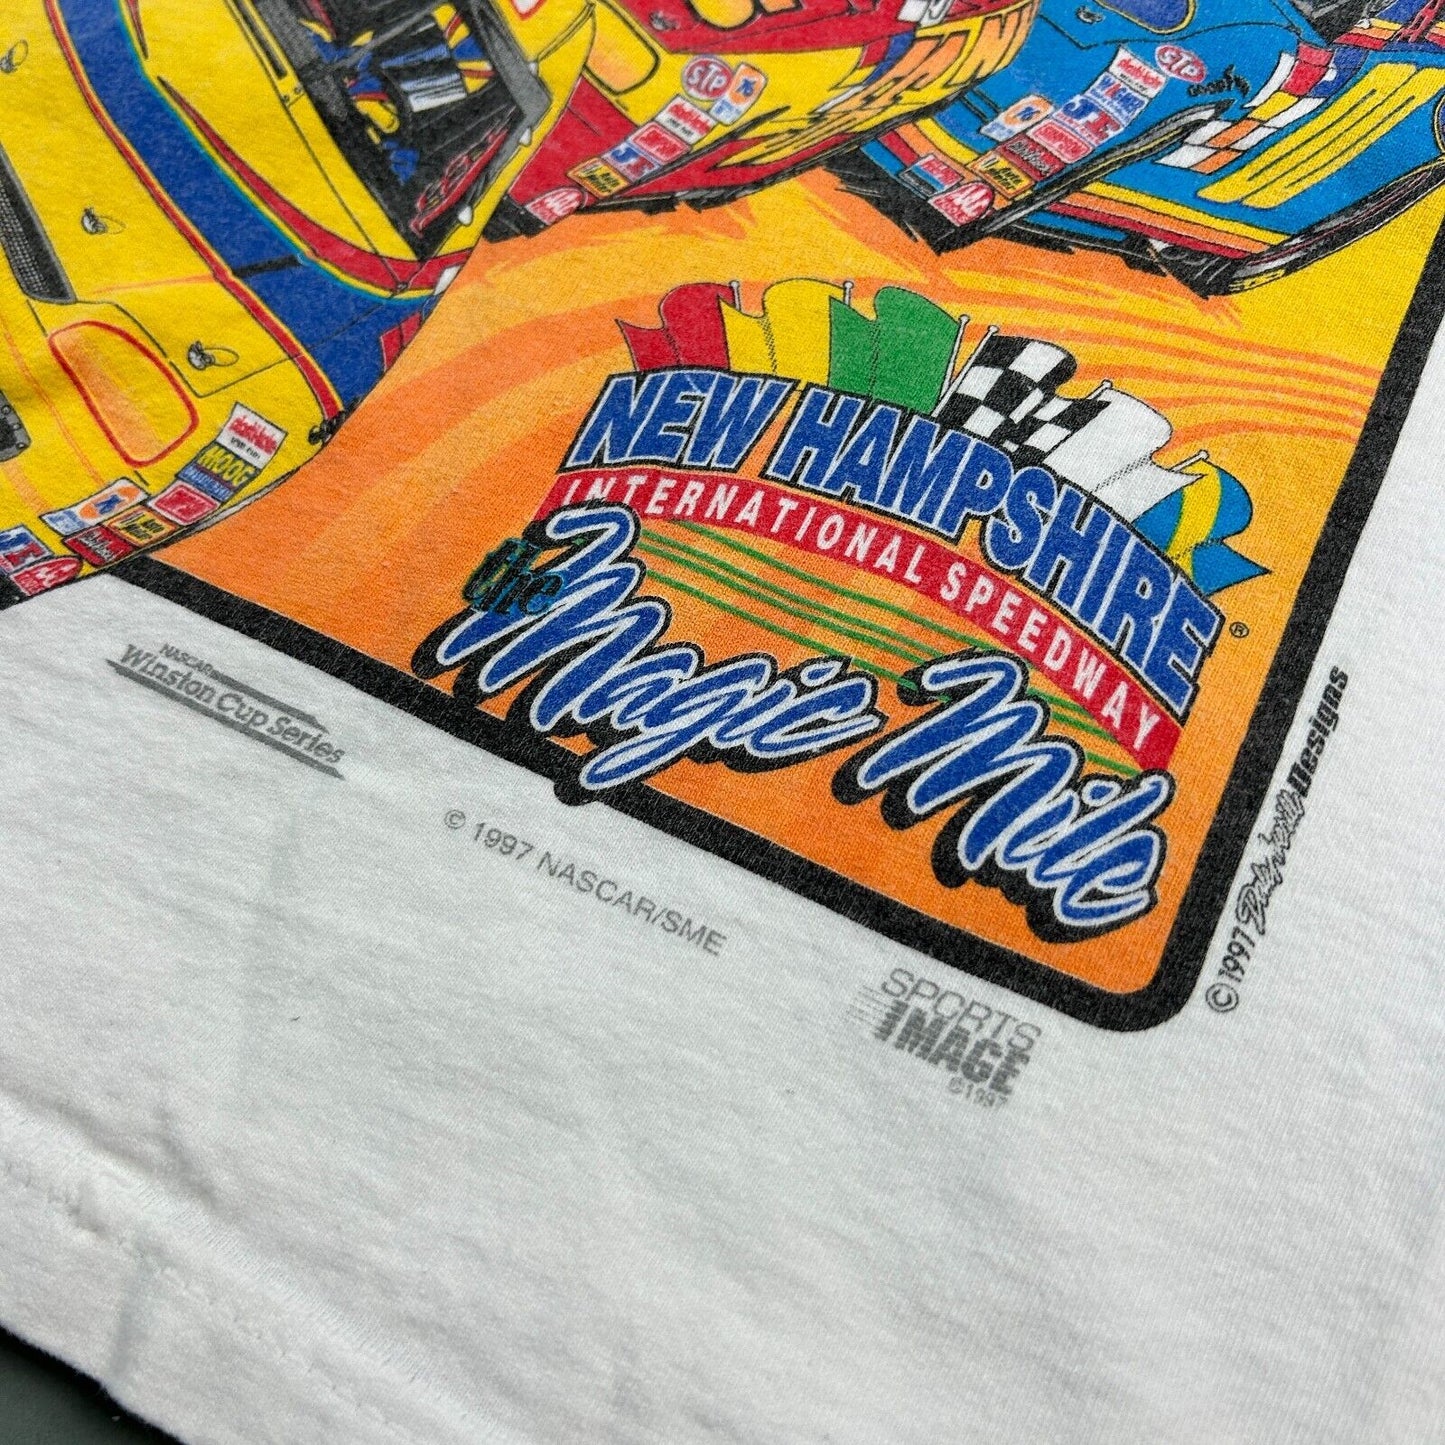 VINTAGE 90s | Jiffy Lube 300 Racing Sleeveless Tank T-Shirt sz M Adult